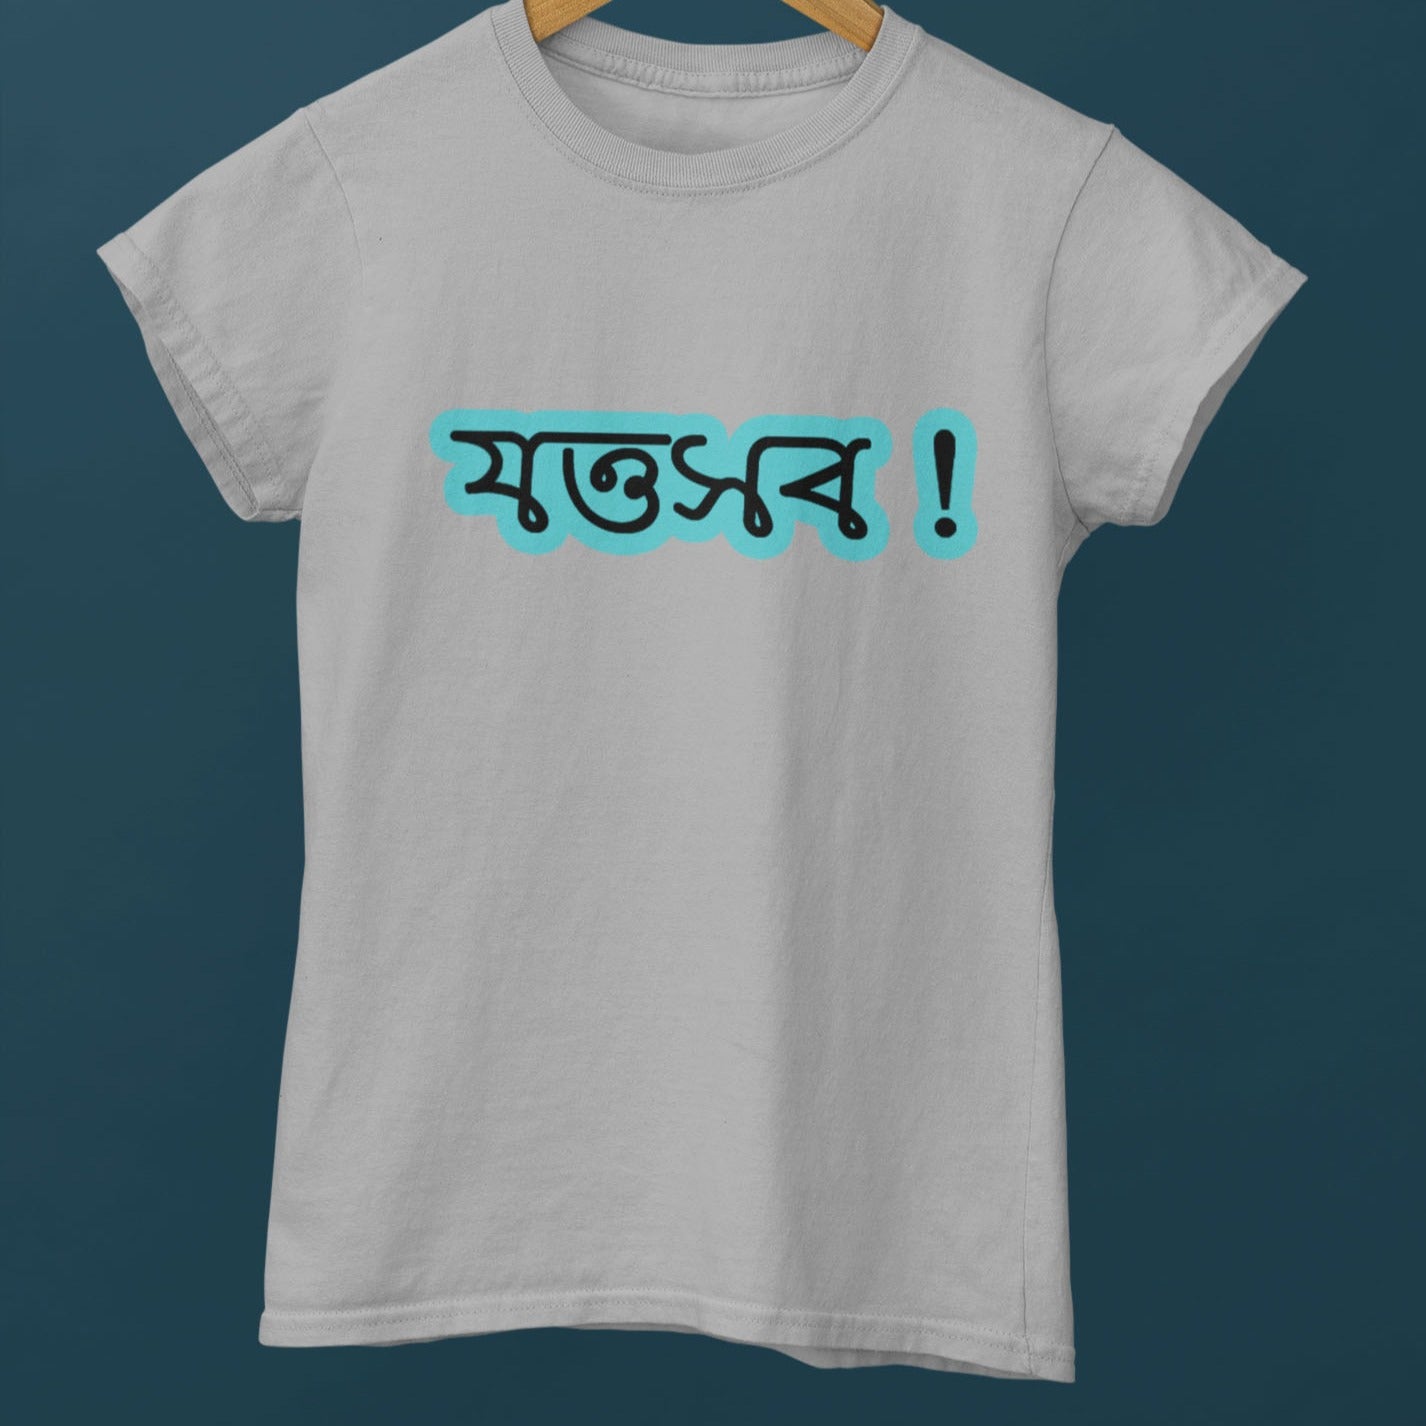 Jottoshob Women's T-Shirt